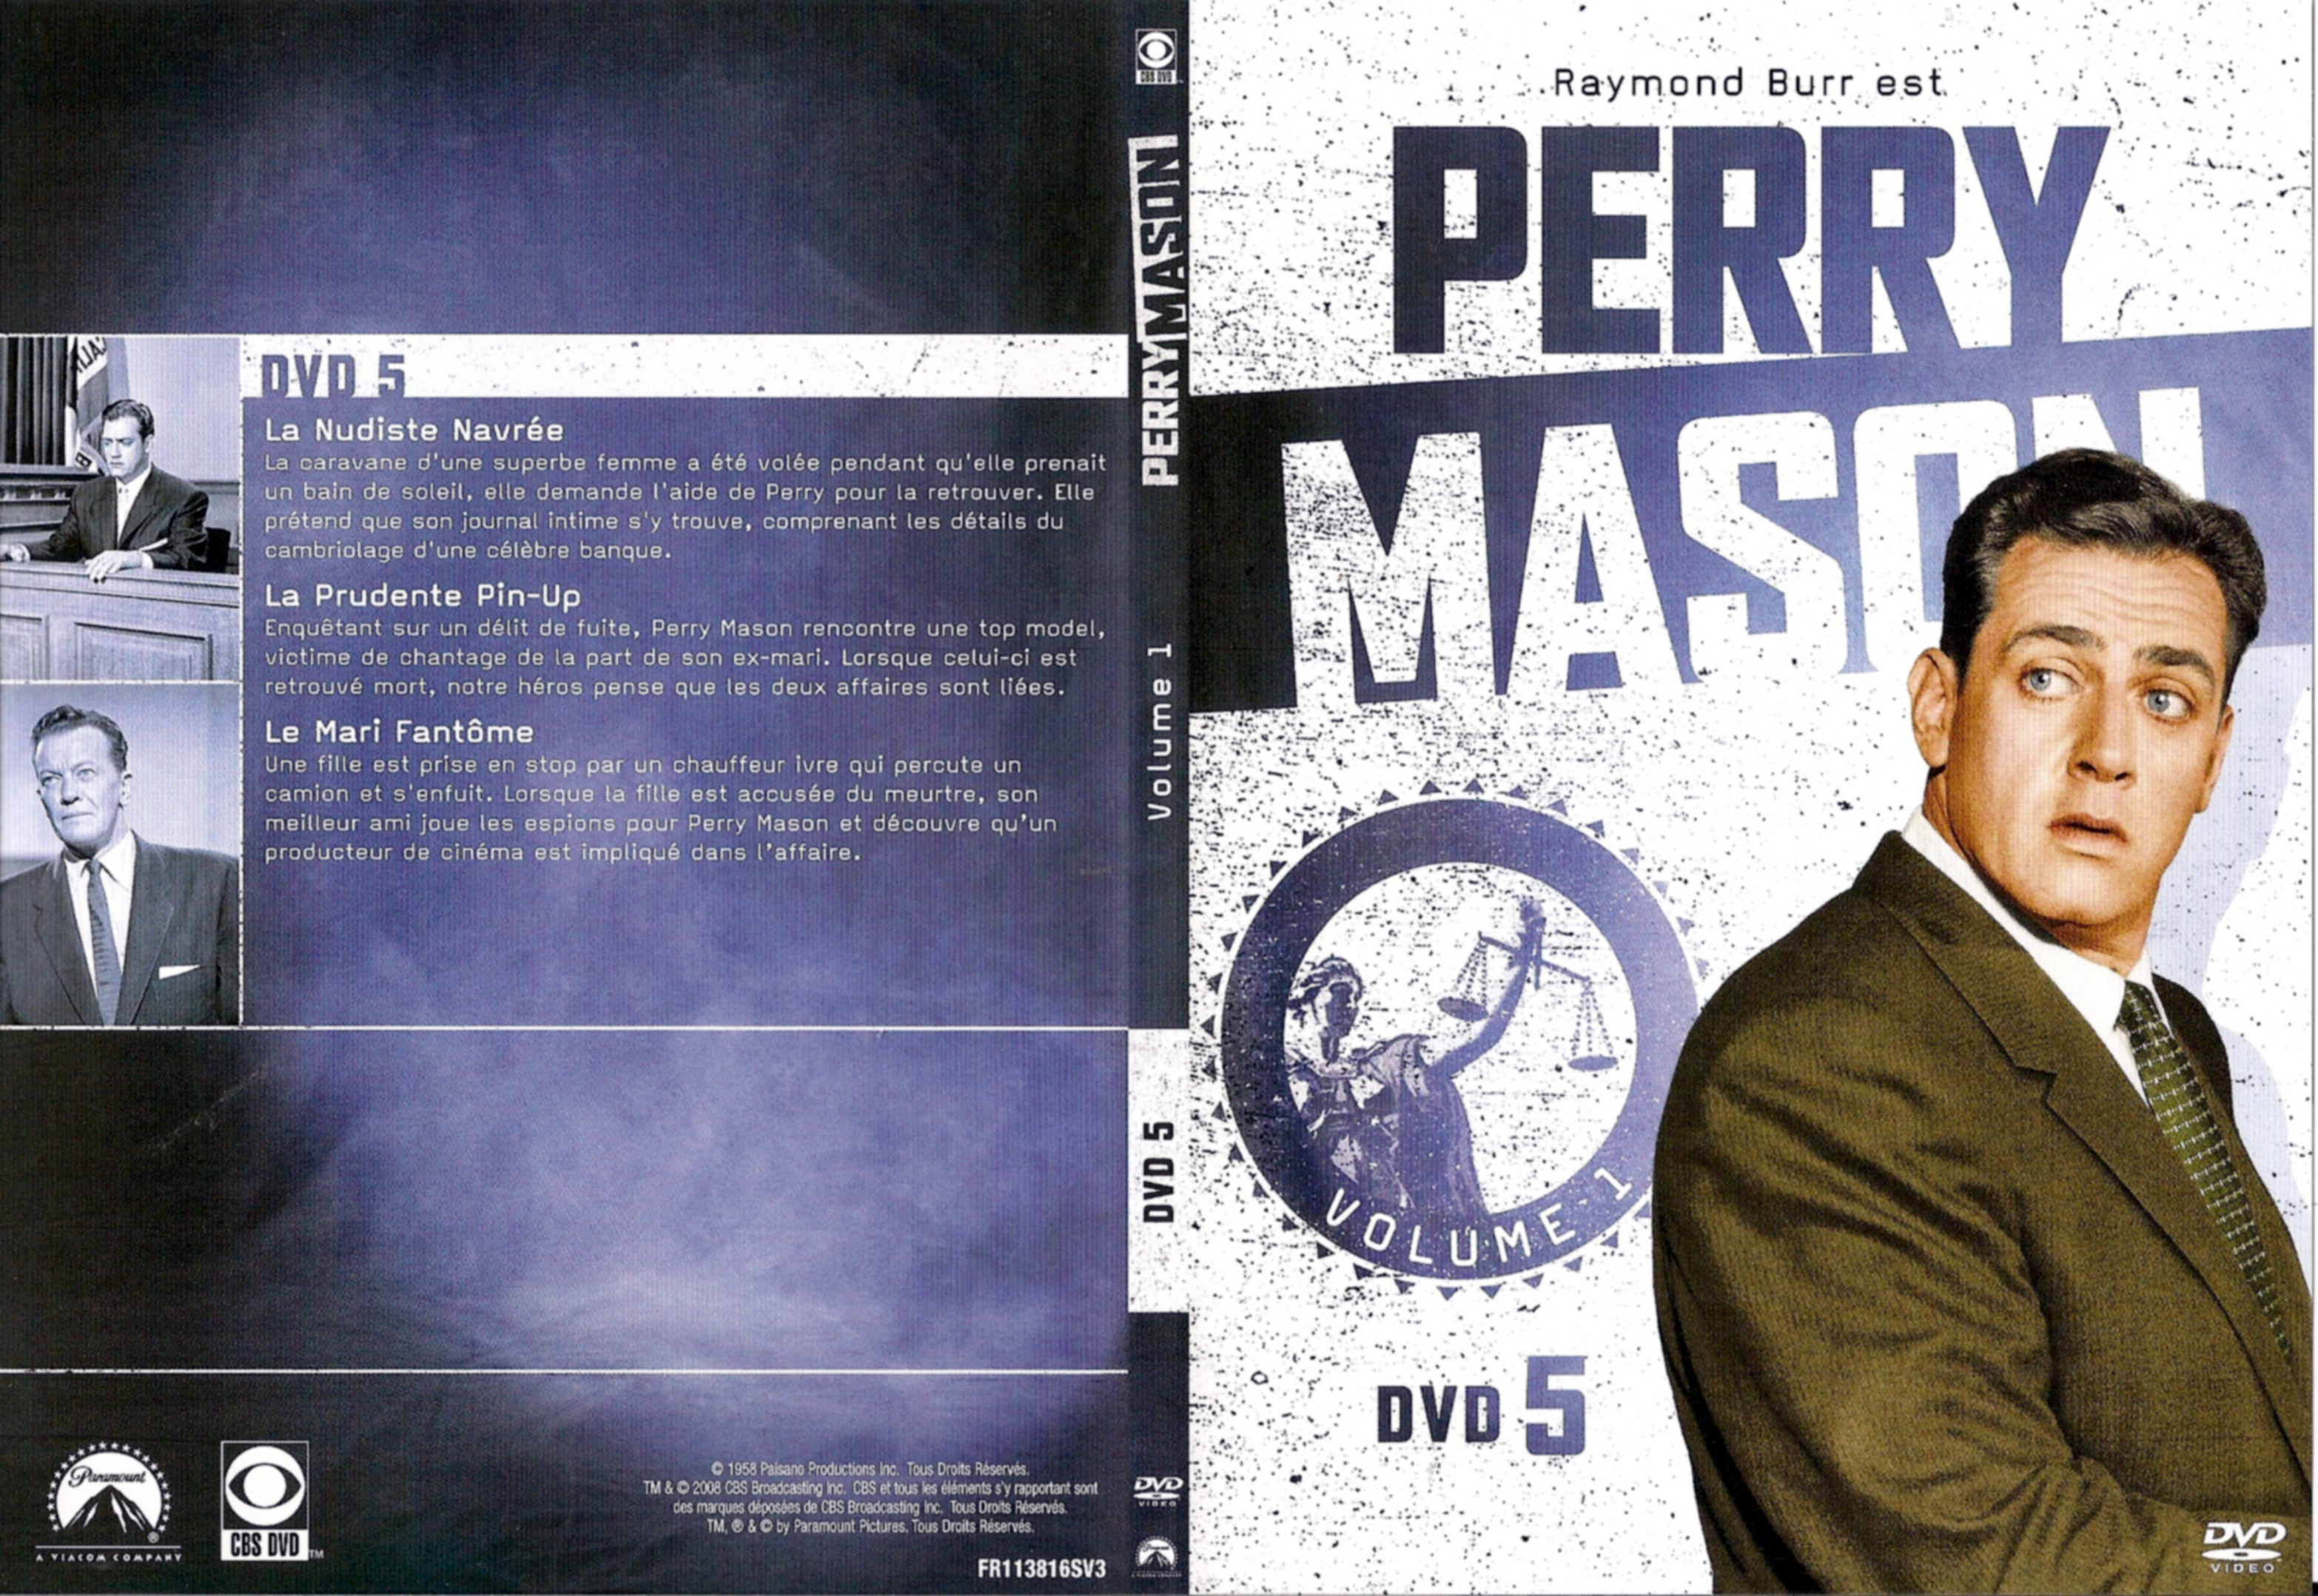 Jaquette DVD Perry Mason Saison 1 DVD 3